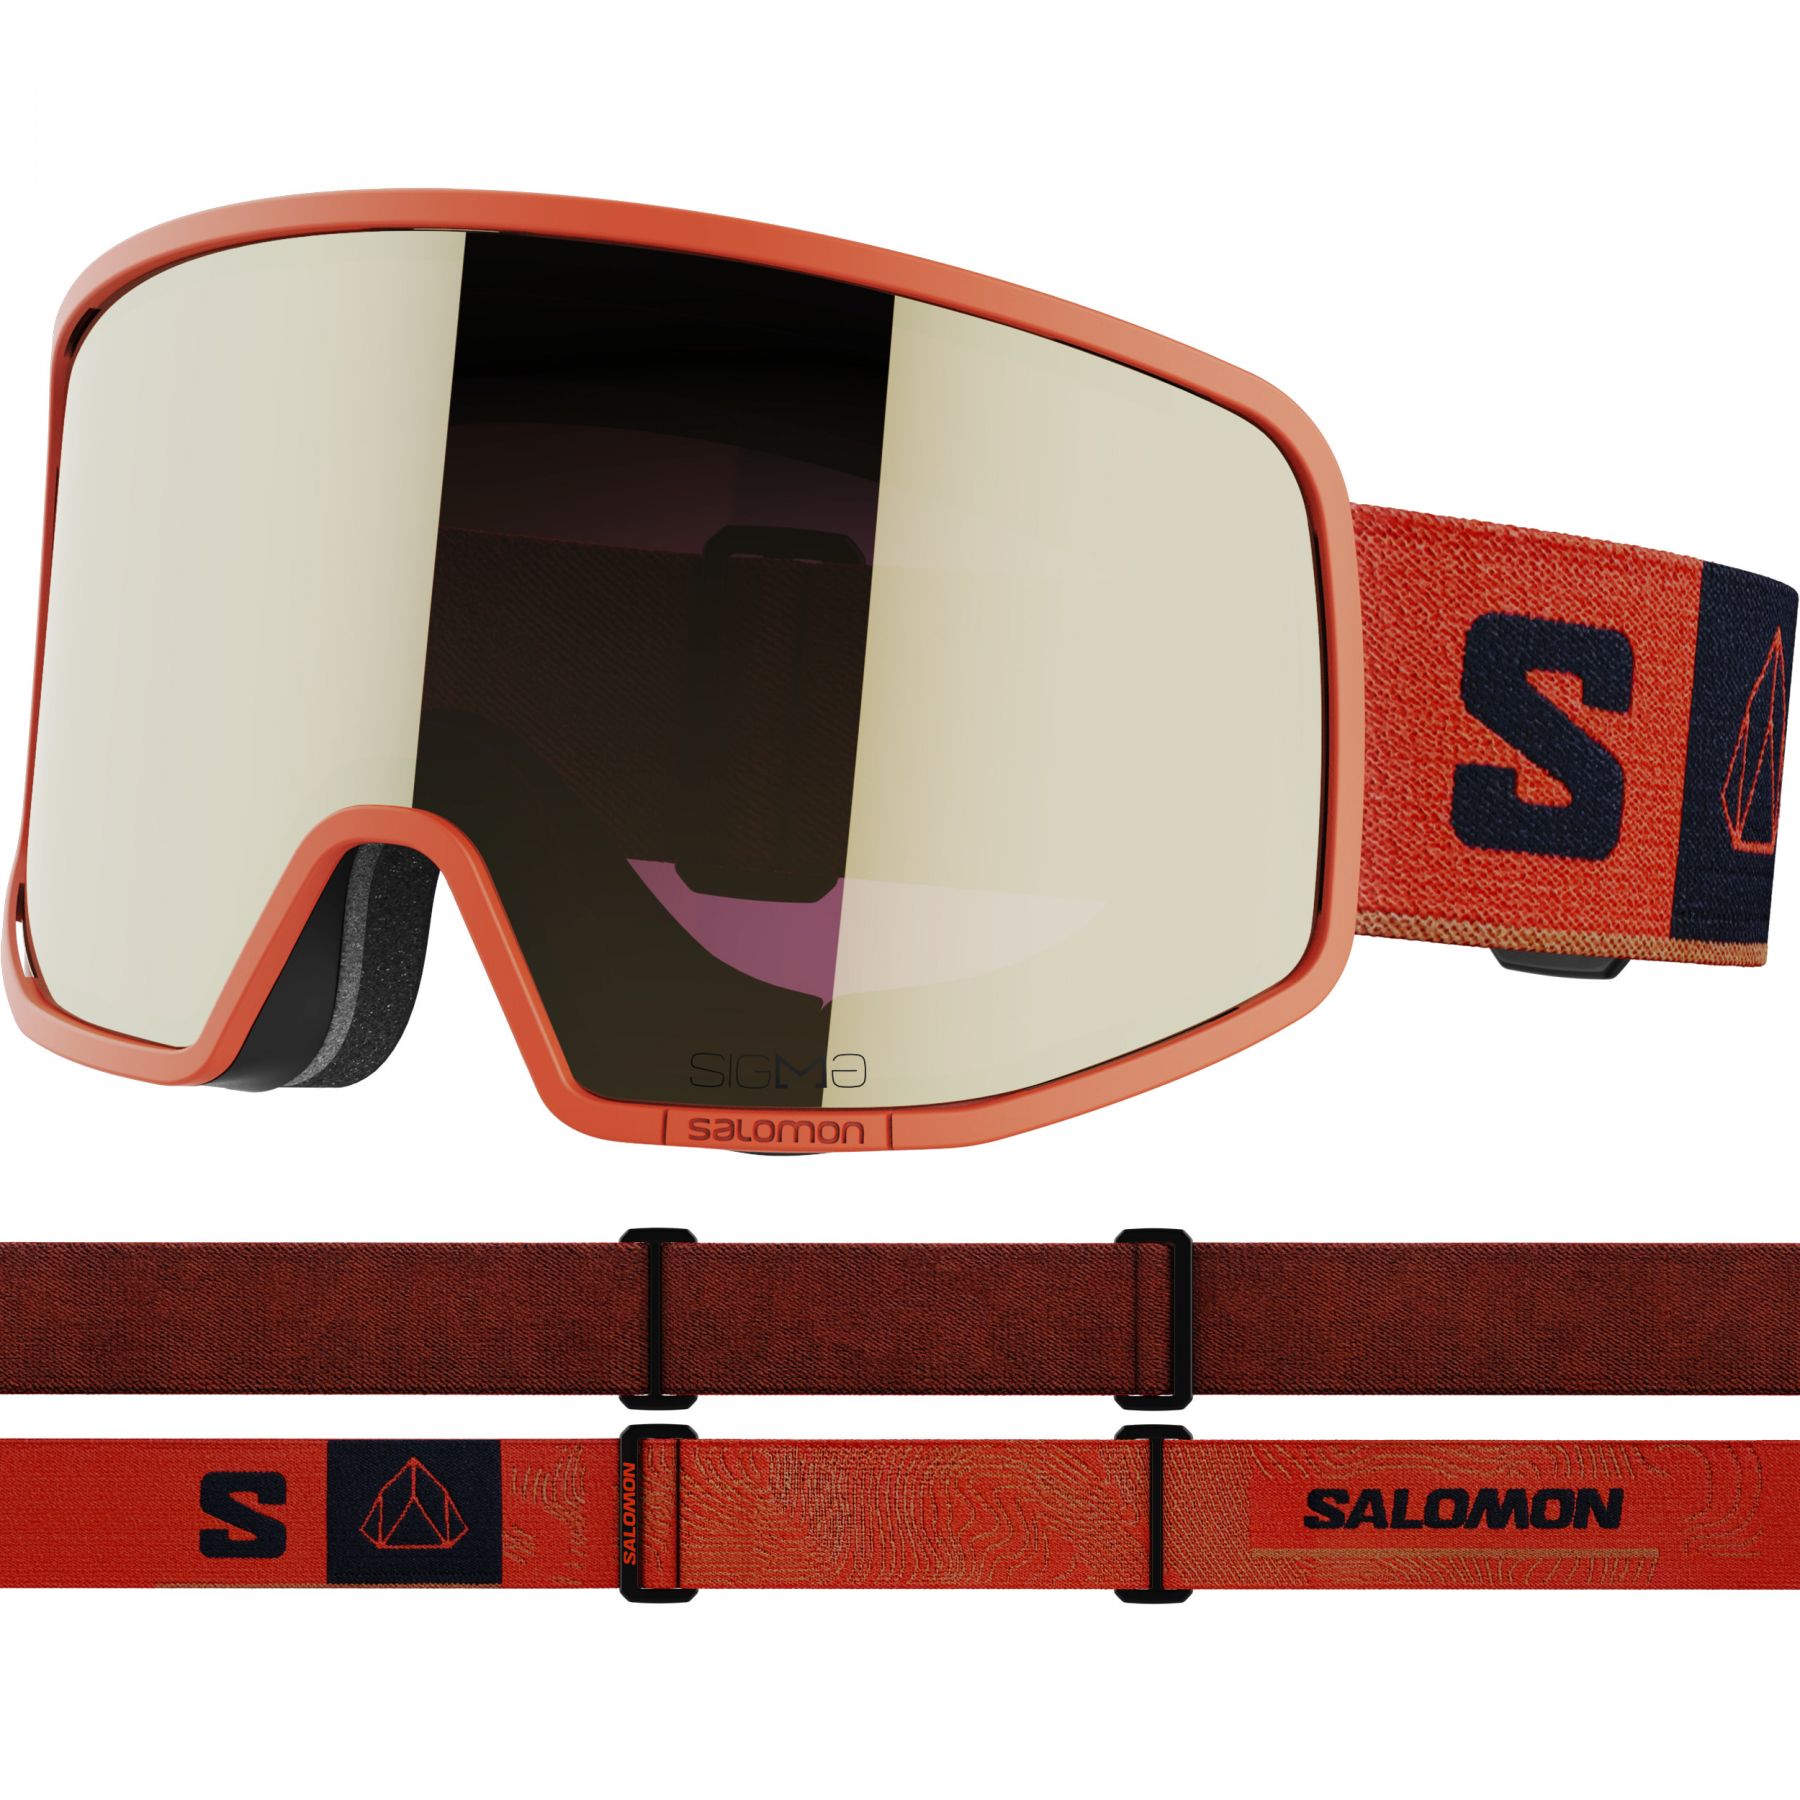 5: Salomon Lo Fi Sigma, skibriller, orange